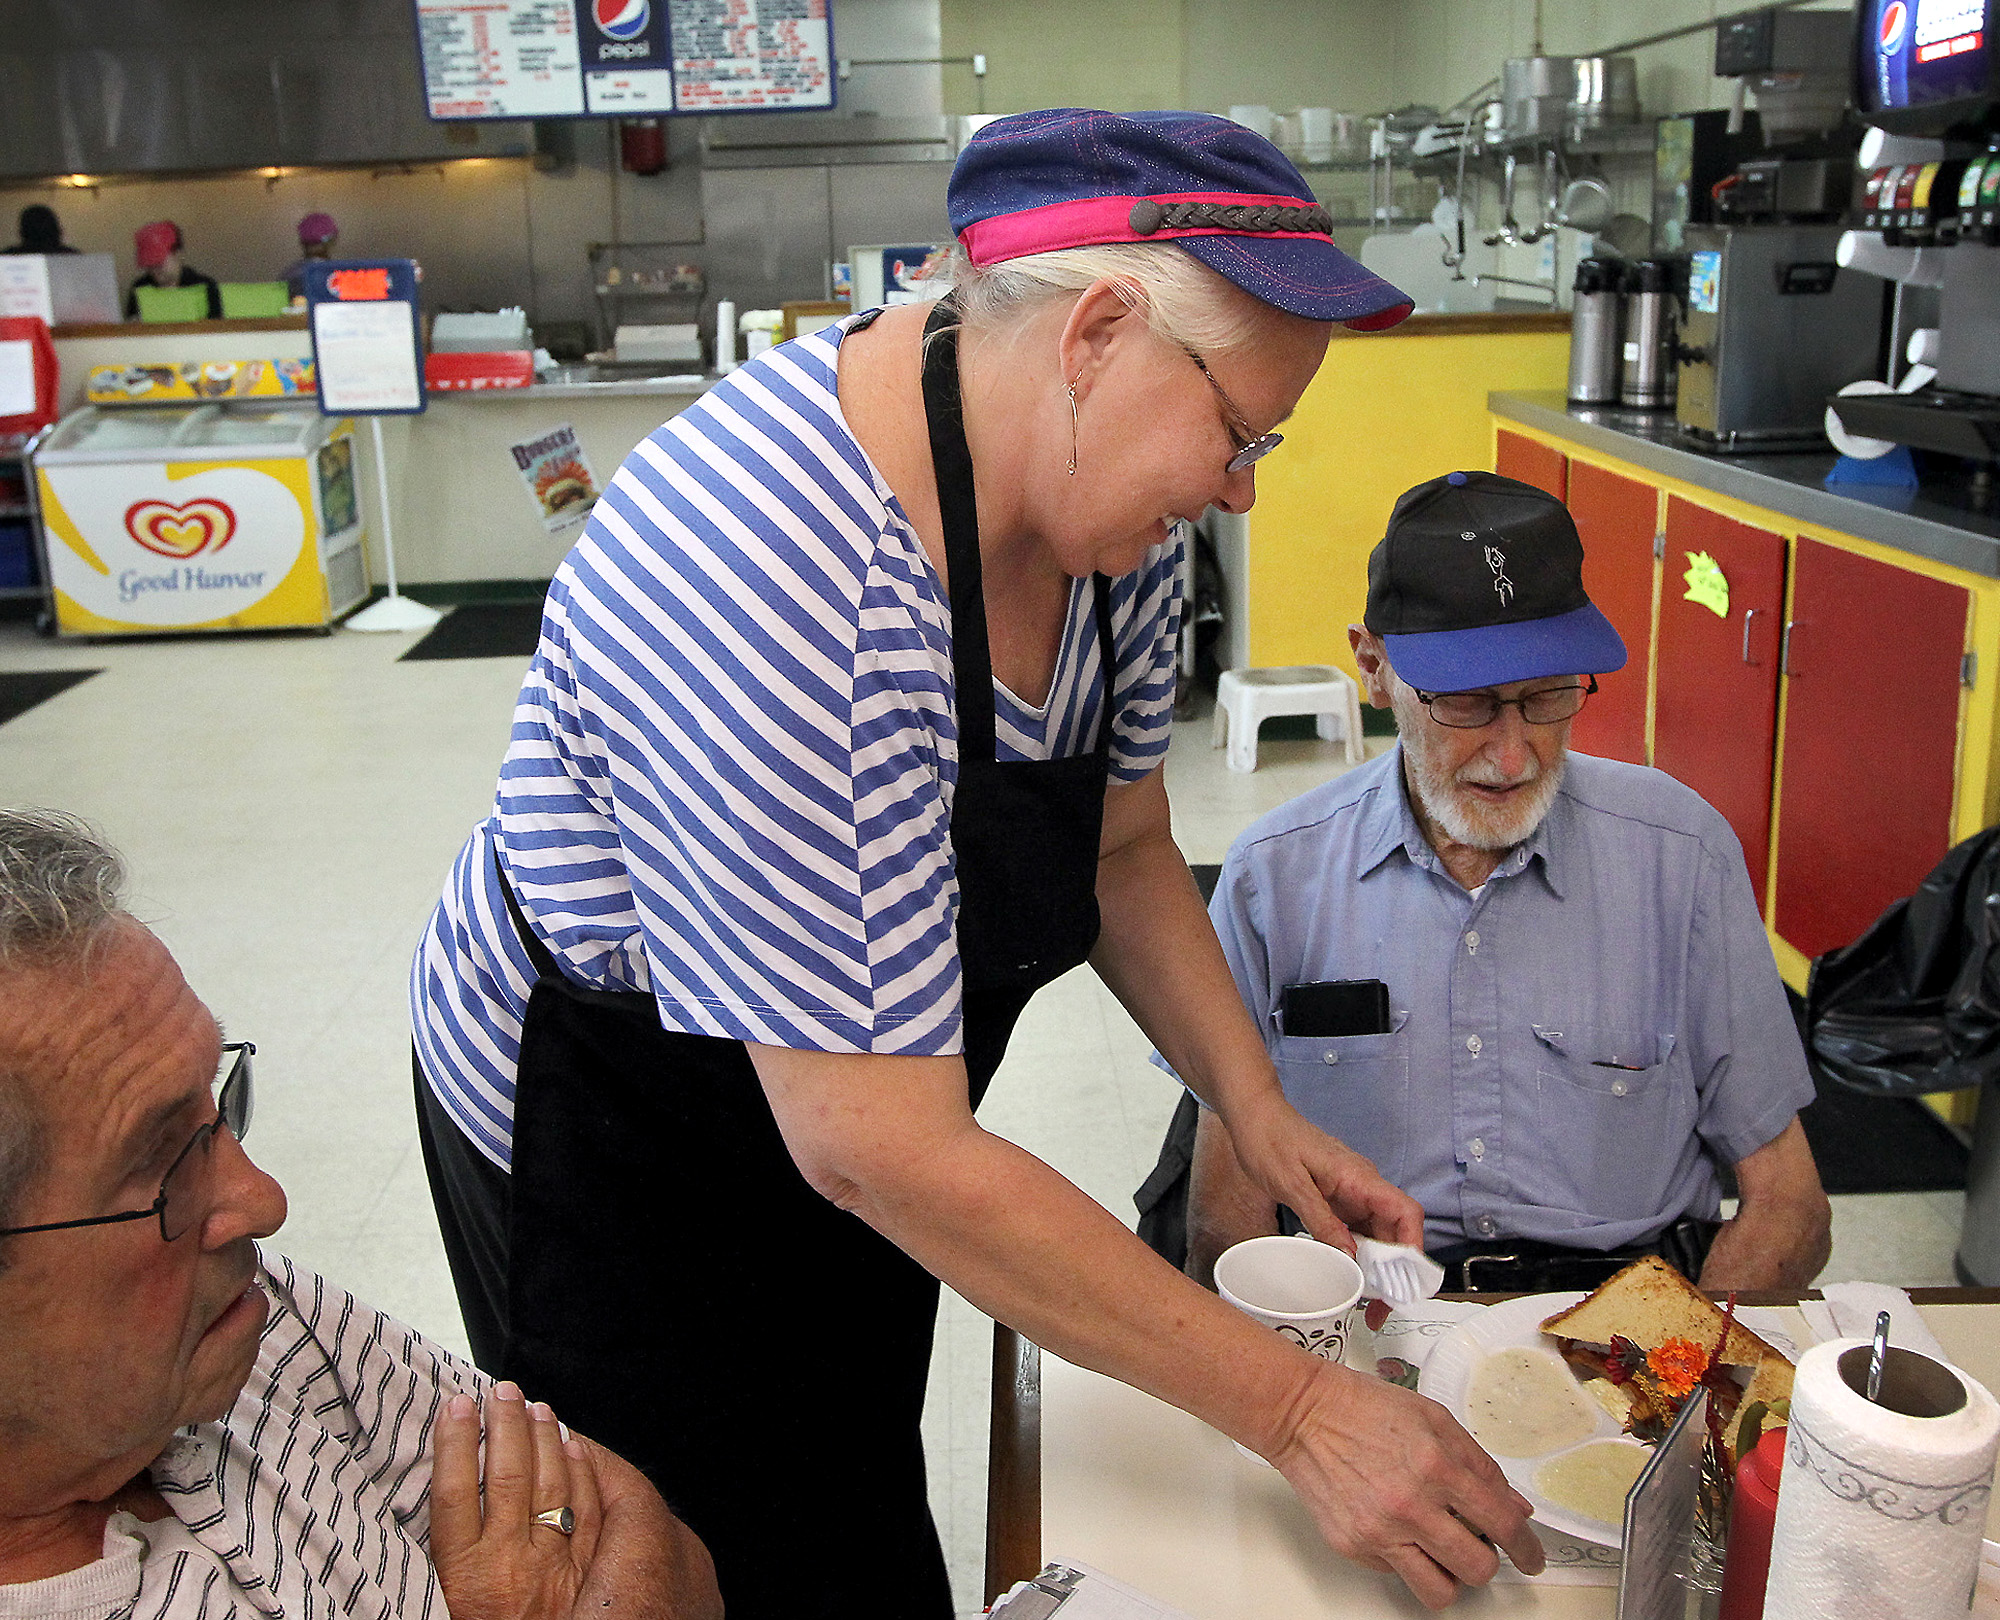 PHOTO: Dana Parris serving customers at her North Carolina restaurant.